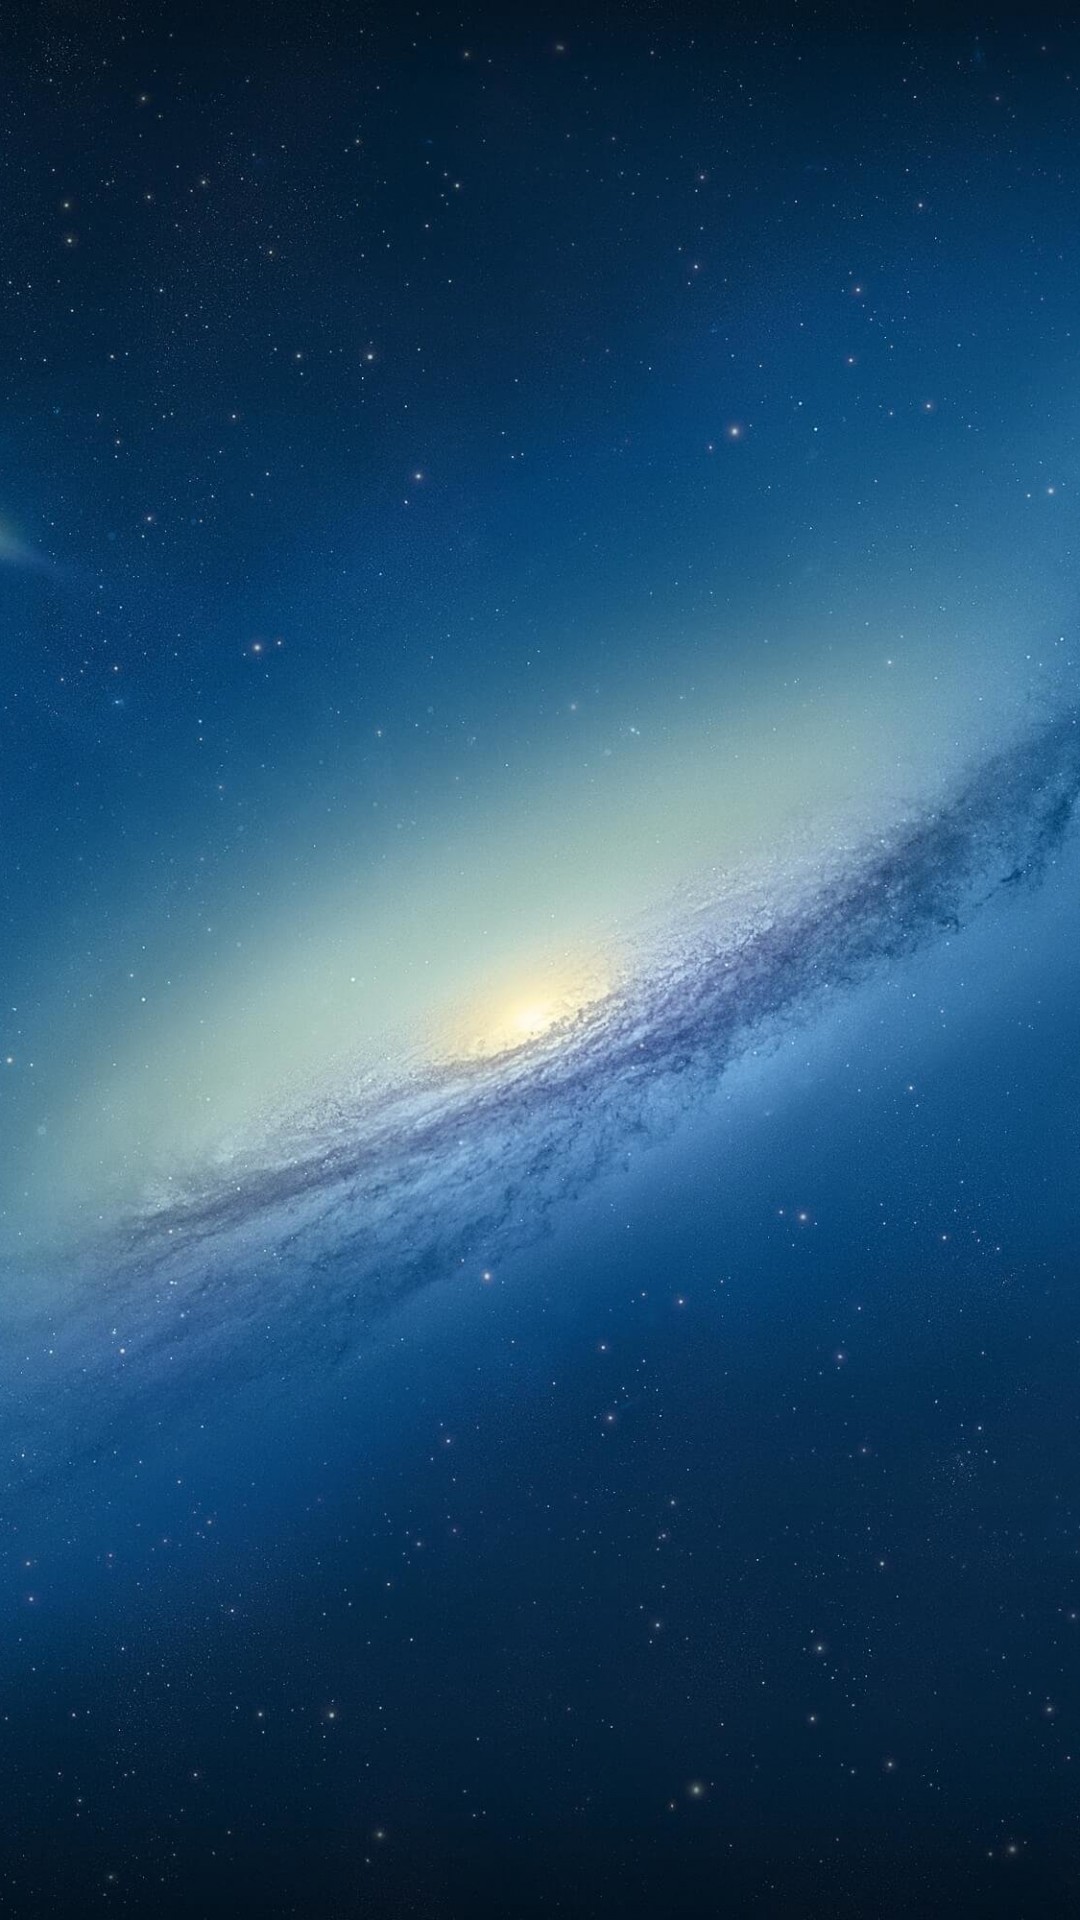 Galaxy NGC 3190 Wallpaper for SAMSUNG Galaxy Note 3